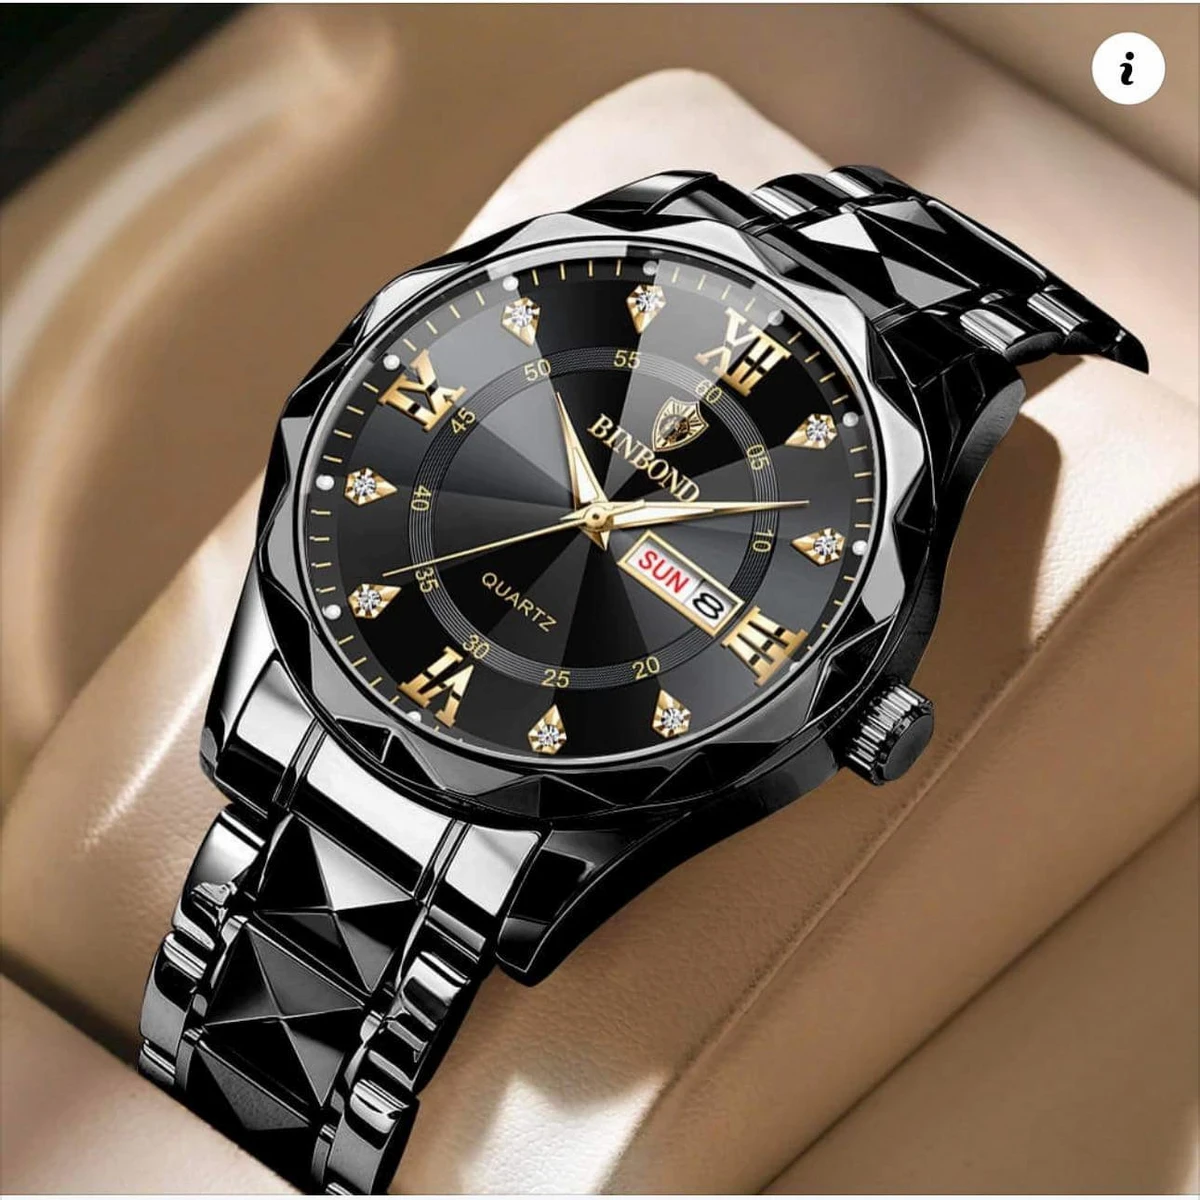 Luxury Binbond authentic men's watch waterproof night light dual calendar watch men's quartz watch diamond ceiling glass- Black